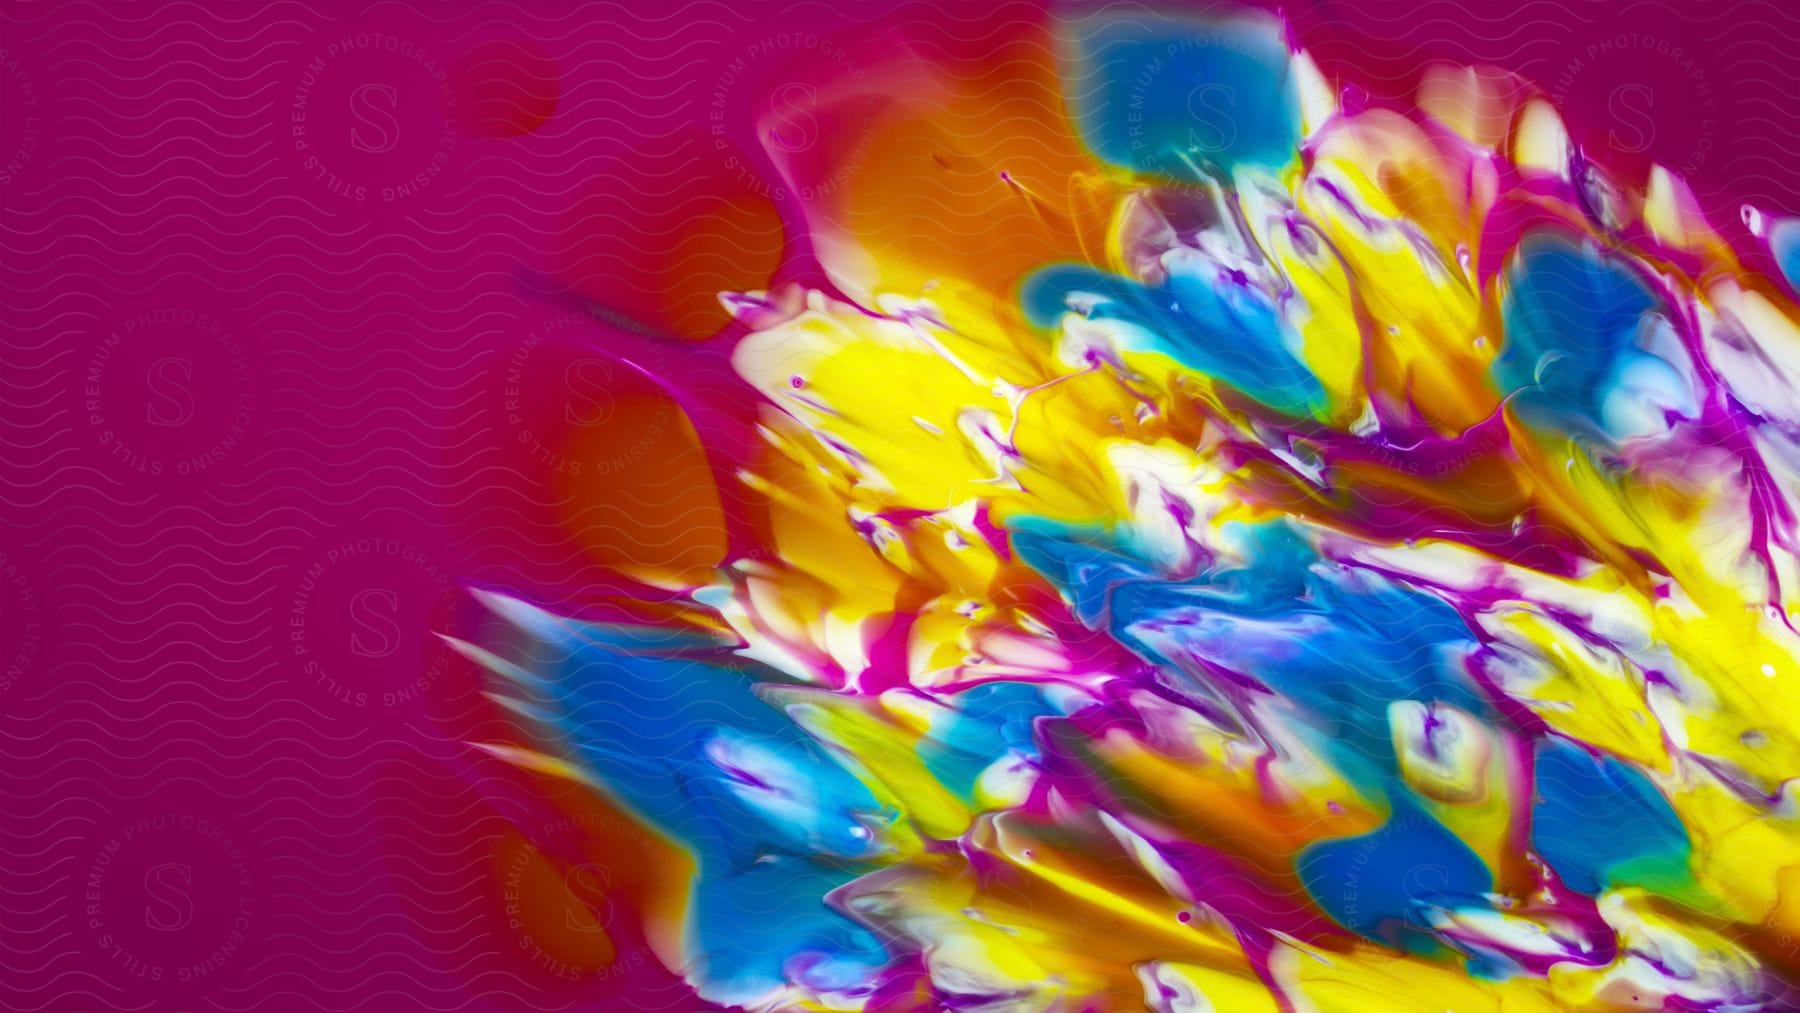 A bouquet of exploding liquid colors.